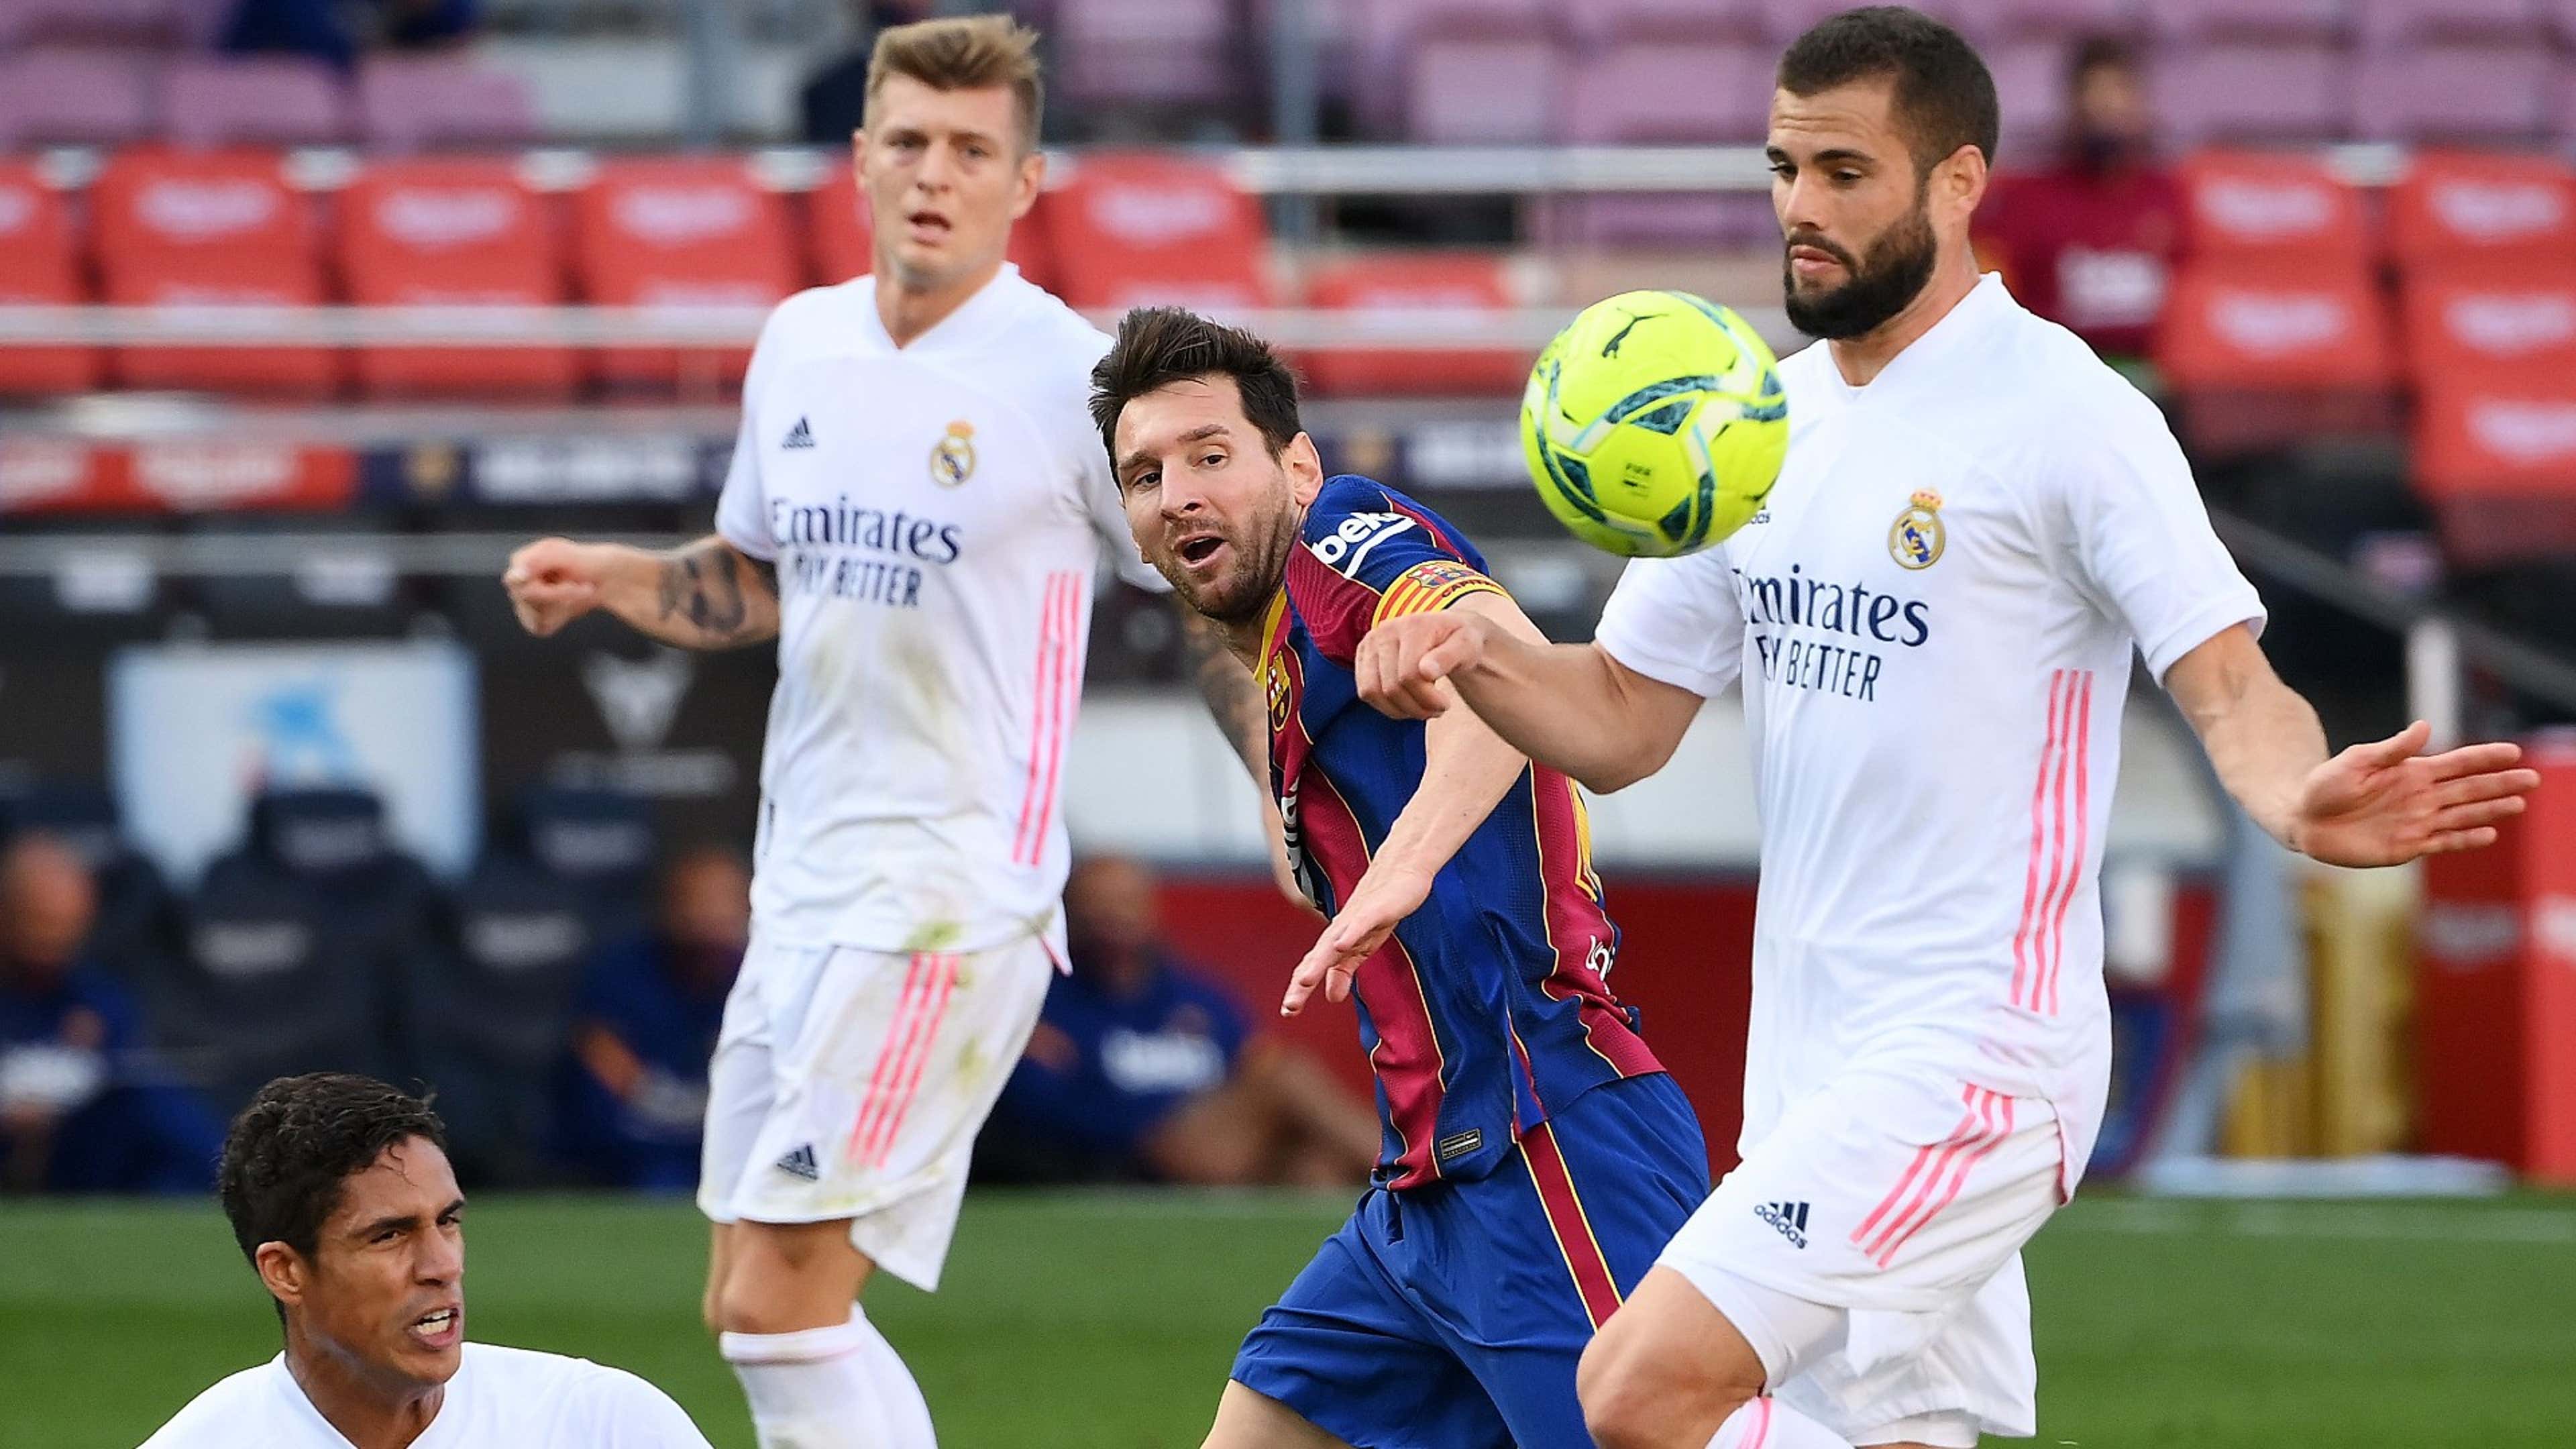 Ligas madrid vs barcelona